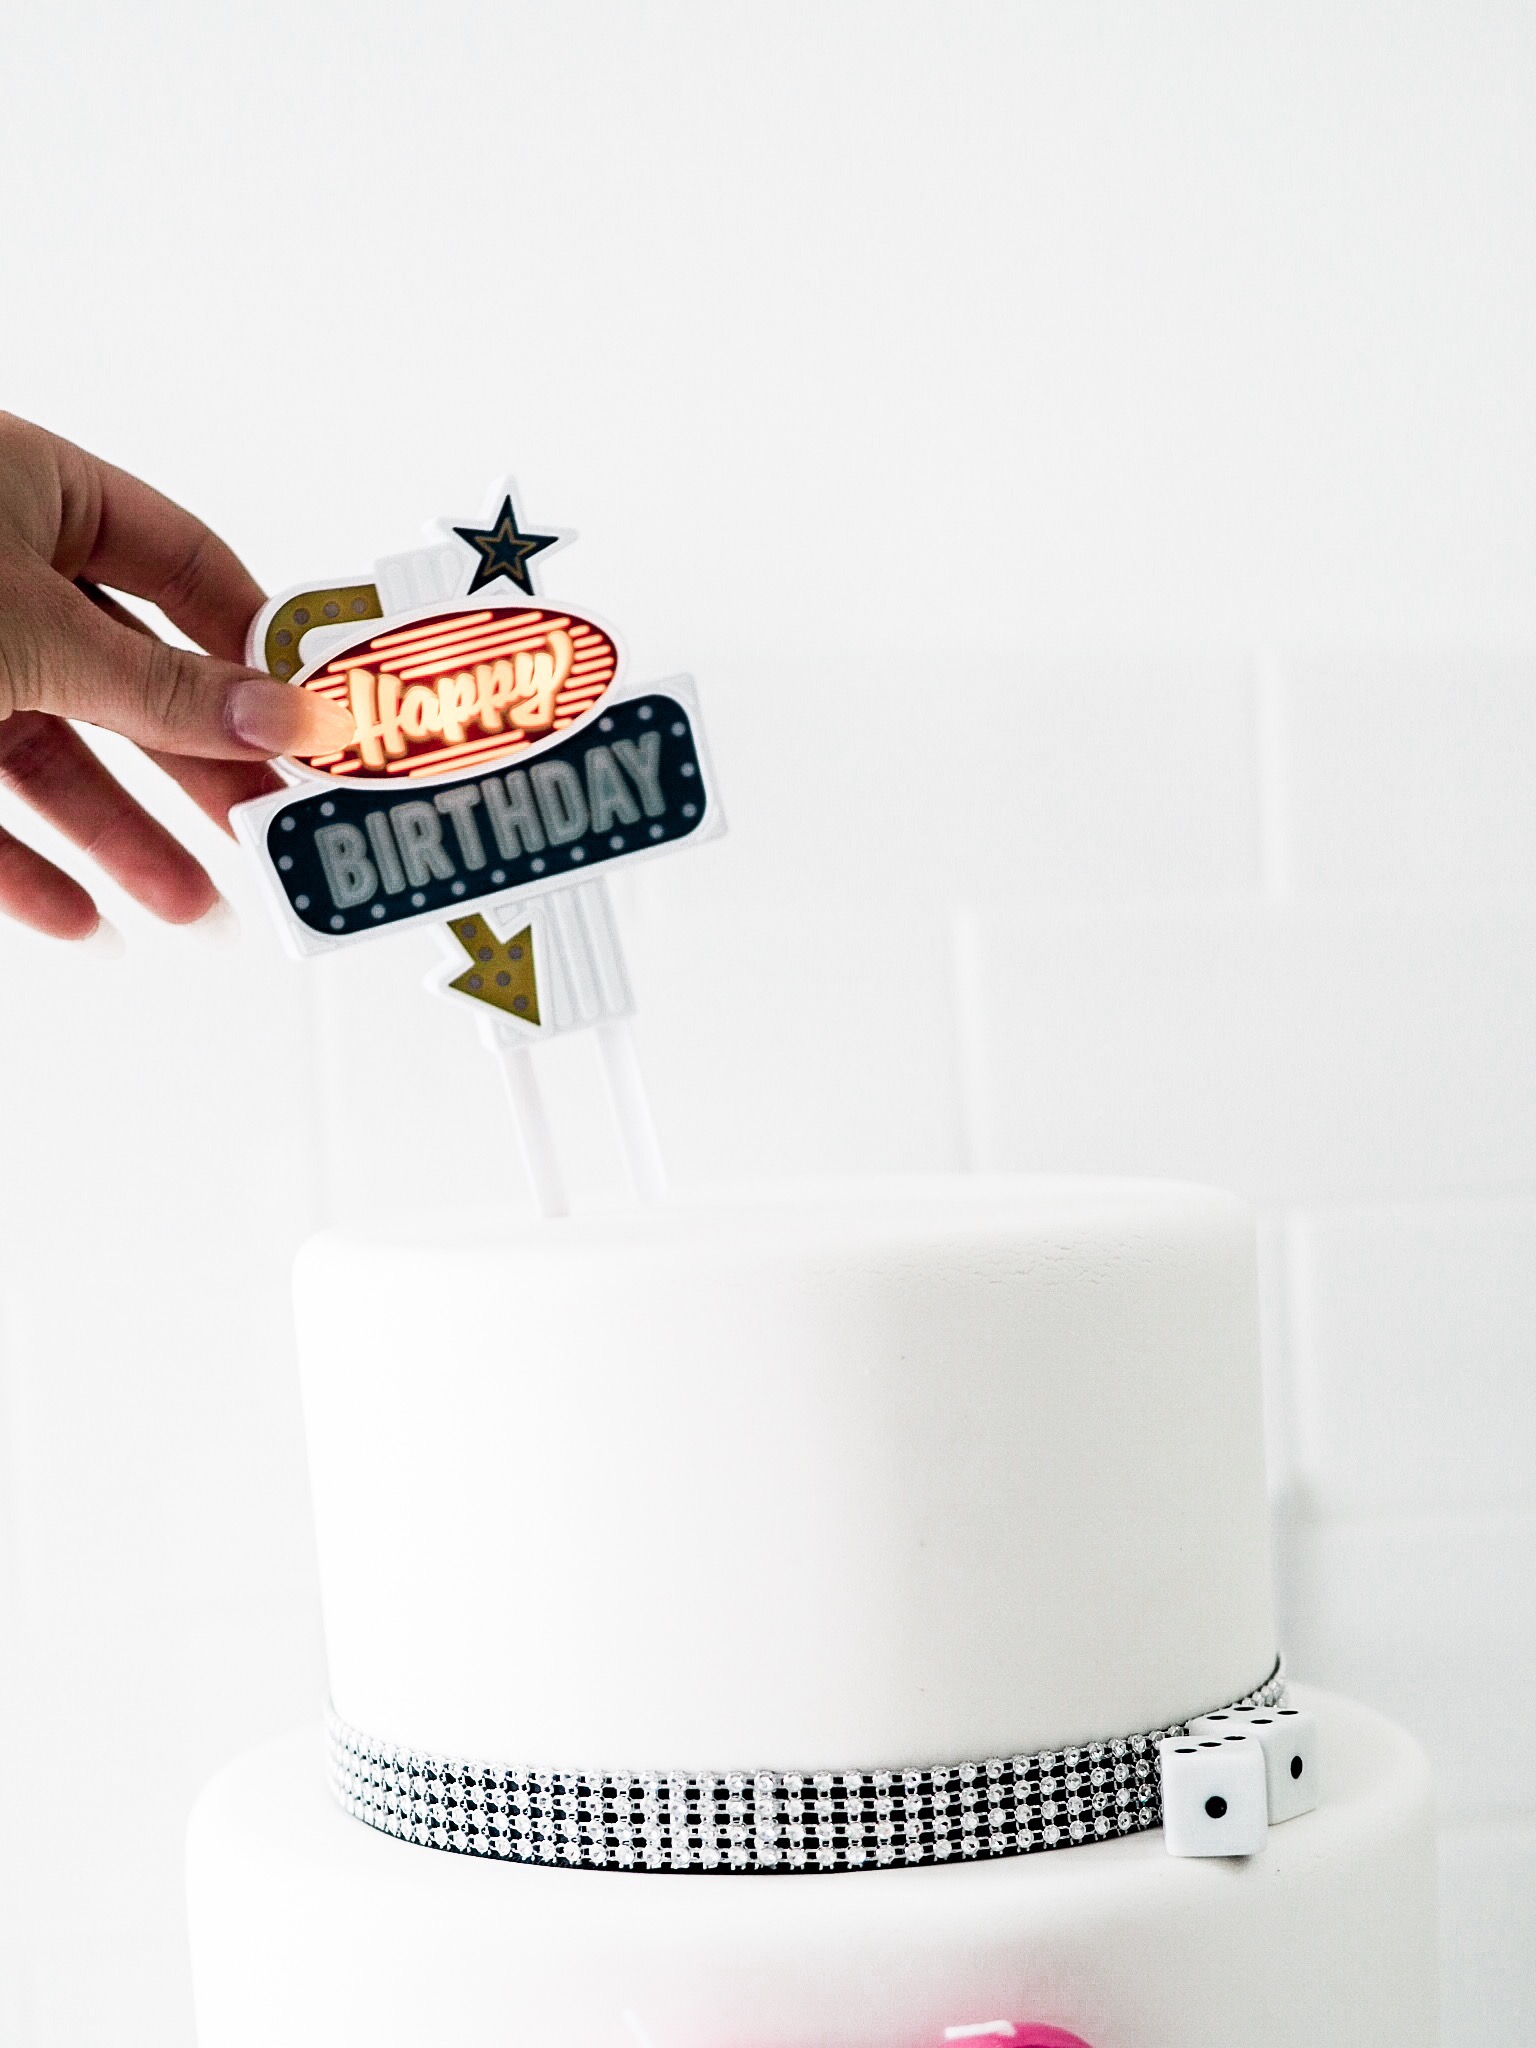 DIY 3 tier fondant vegas casino theme party girl birthday cake bachelorette // Charleston Fashion blogger Dannon K. Collard Like The Yogurt 30th